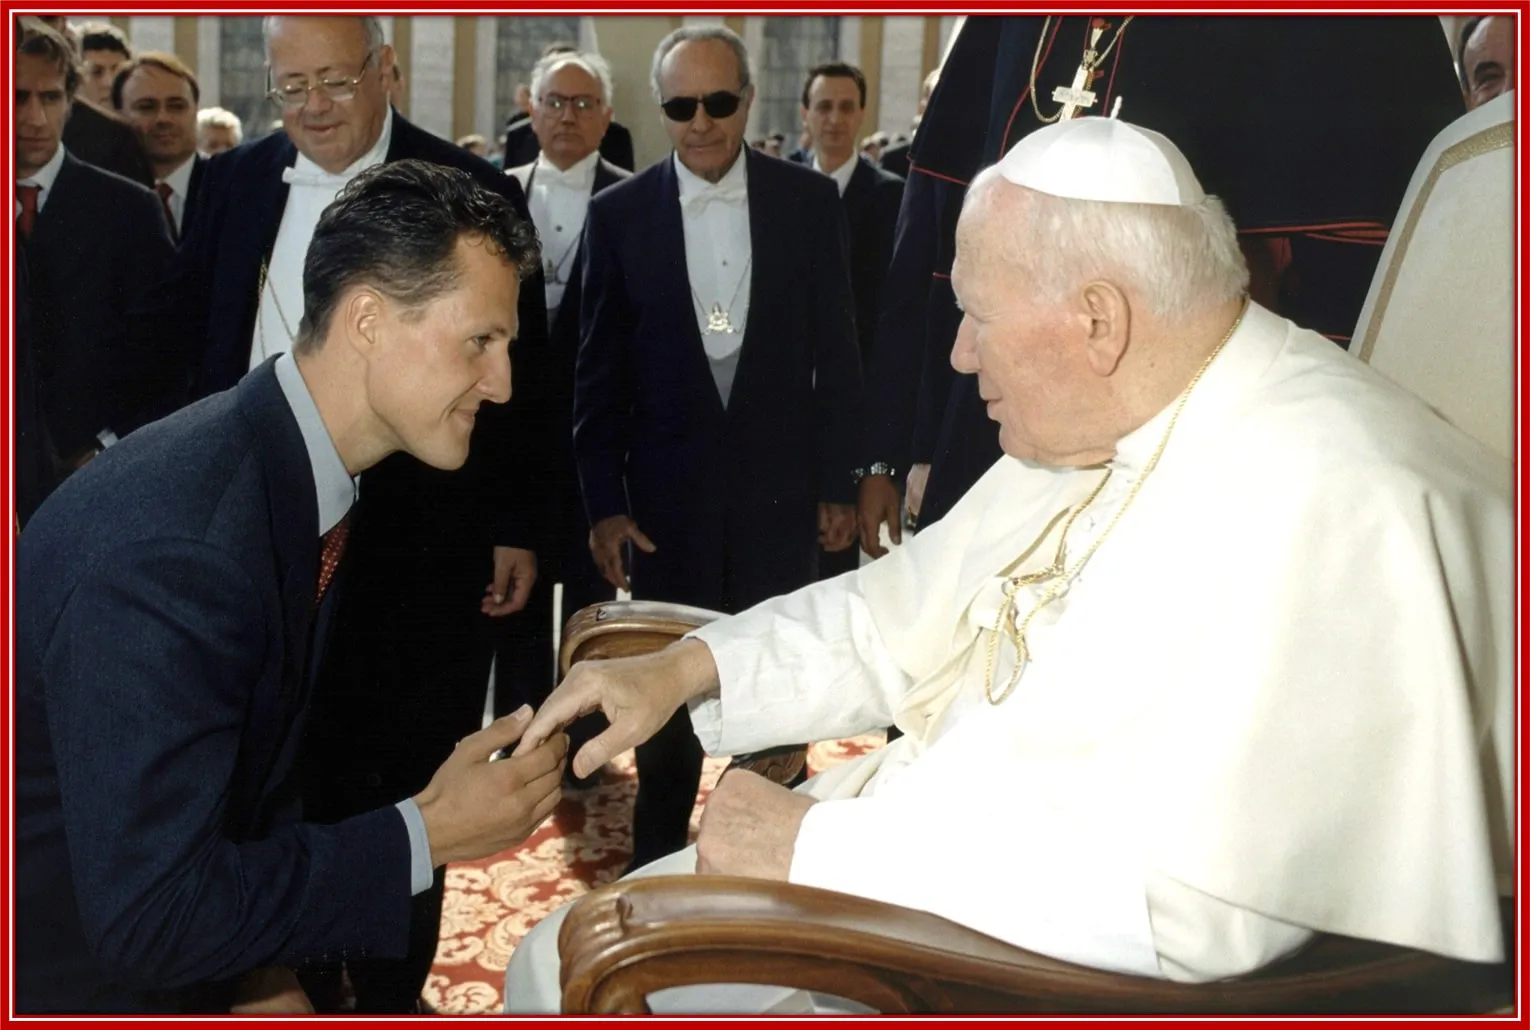 Schumacher met Pope John Paul the second in St Peter's Square in 1999.